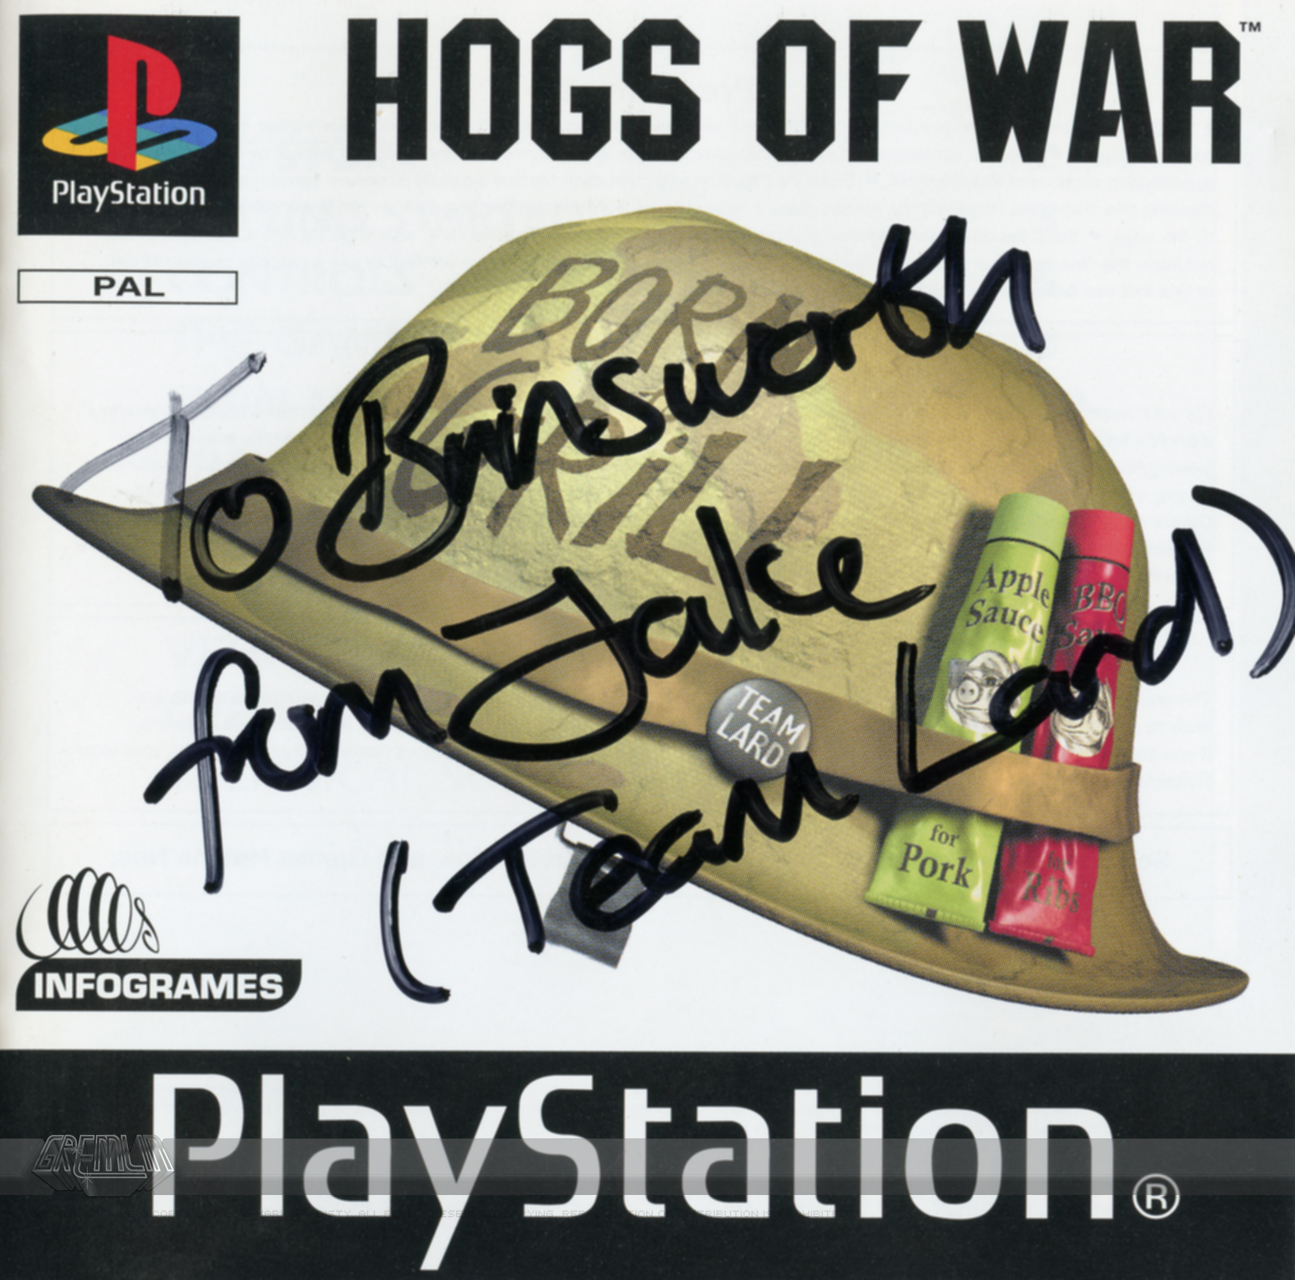 Signed Playstation Hogs of War